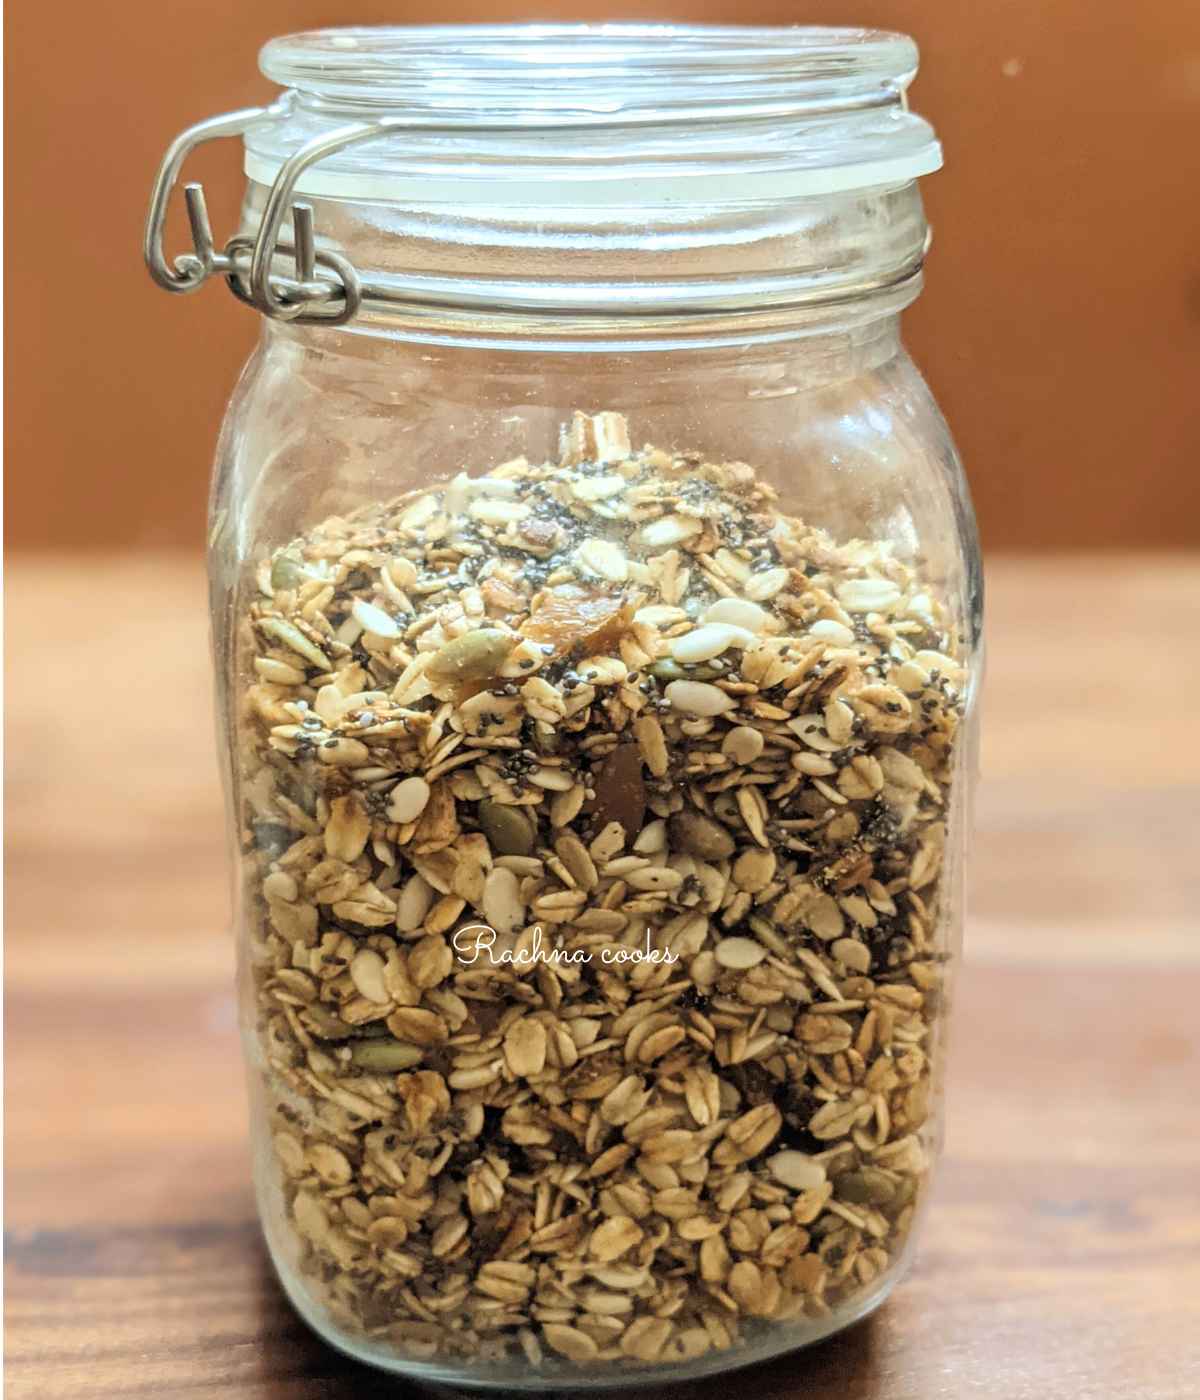 A jar of air fried granola